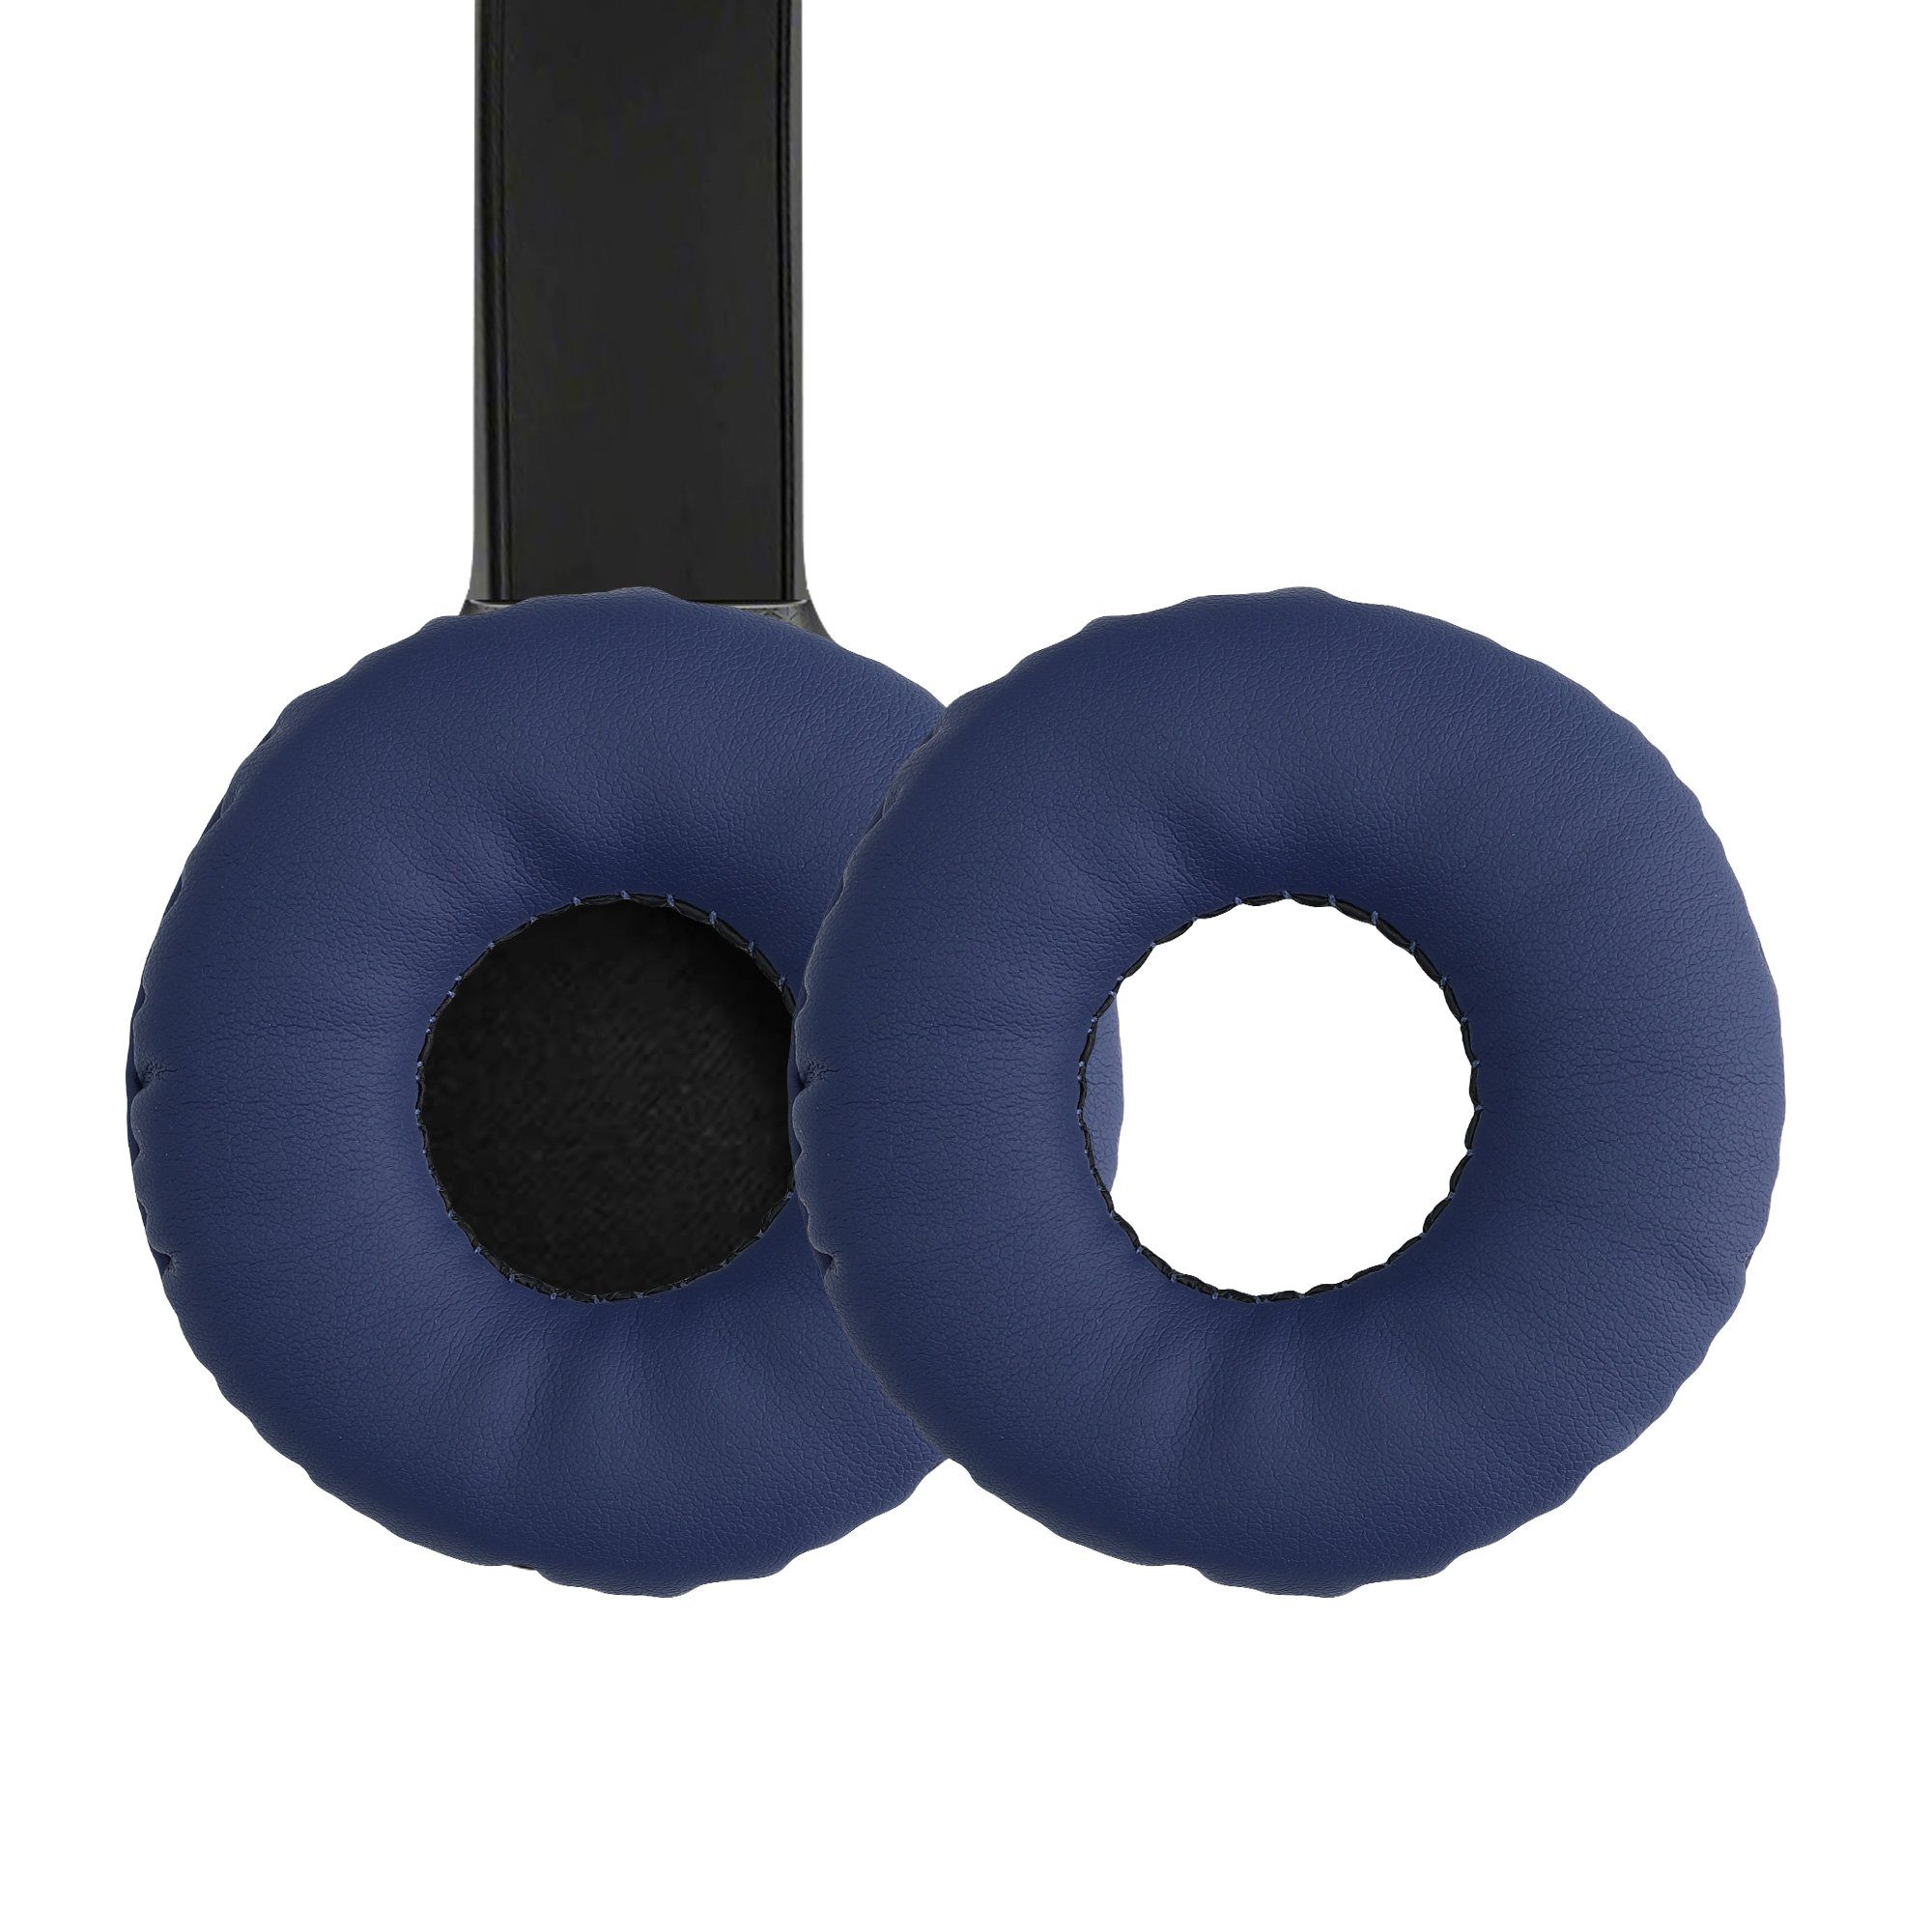 kwmobile 2x WH-CH510 Kopfhörer für - Kunstleder Over Blau Headphones) Ohr Sony für Ohrpolster Polster (Ohrpolster Polster Ear